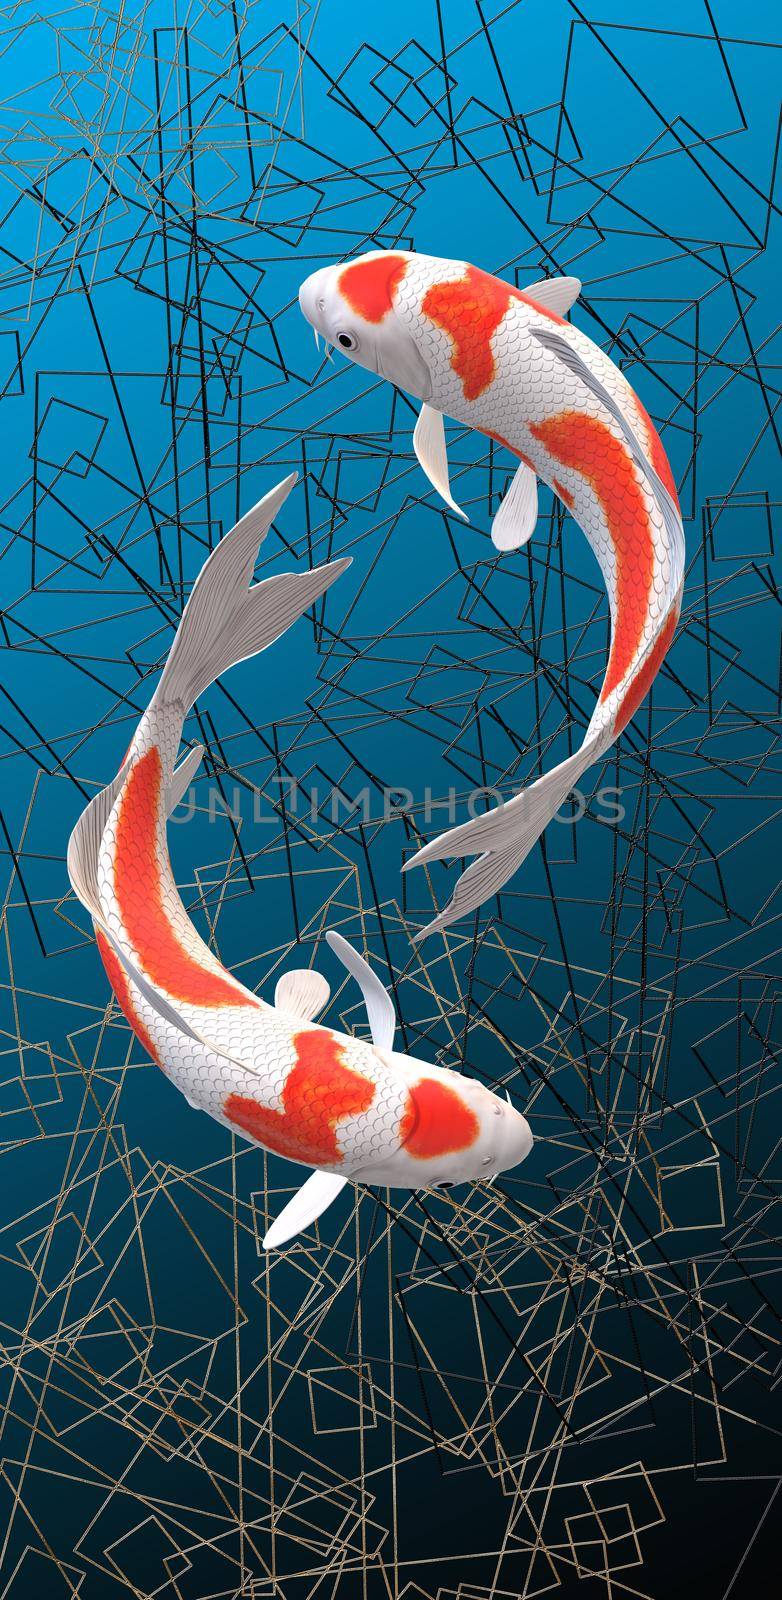 Abstract koi fish on blue water background. Ocean fish, nature, wildlife, aquarium, underwater life, marine fauna. 3D illustration